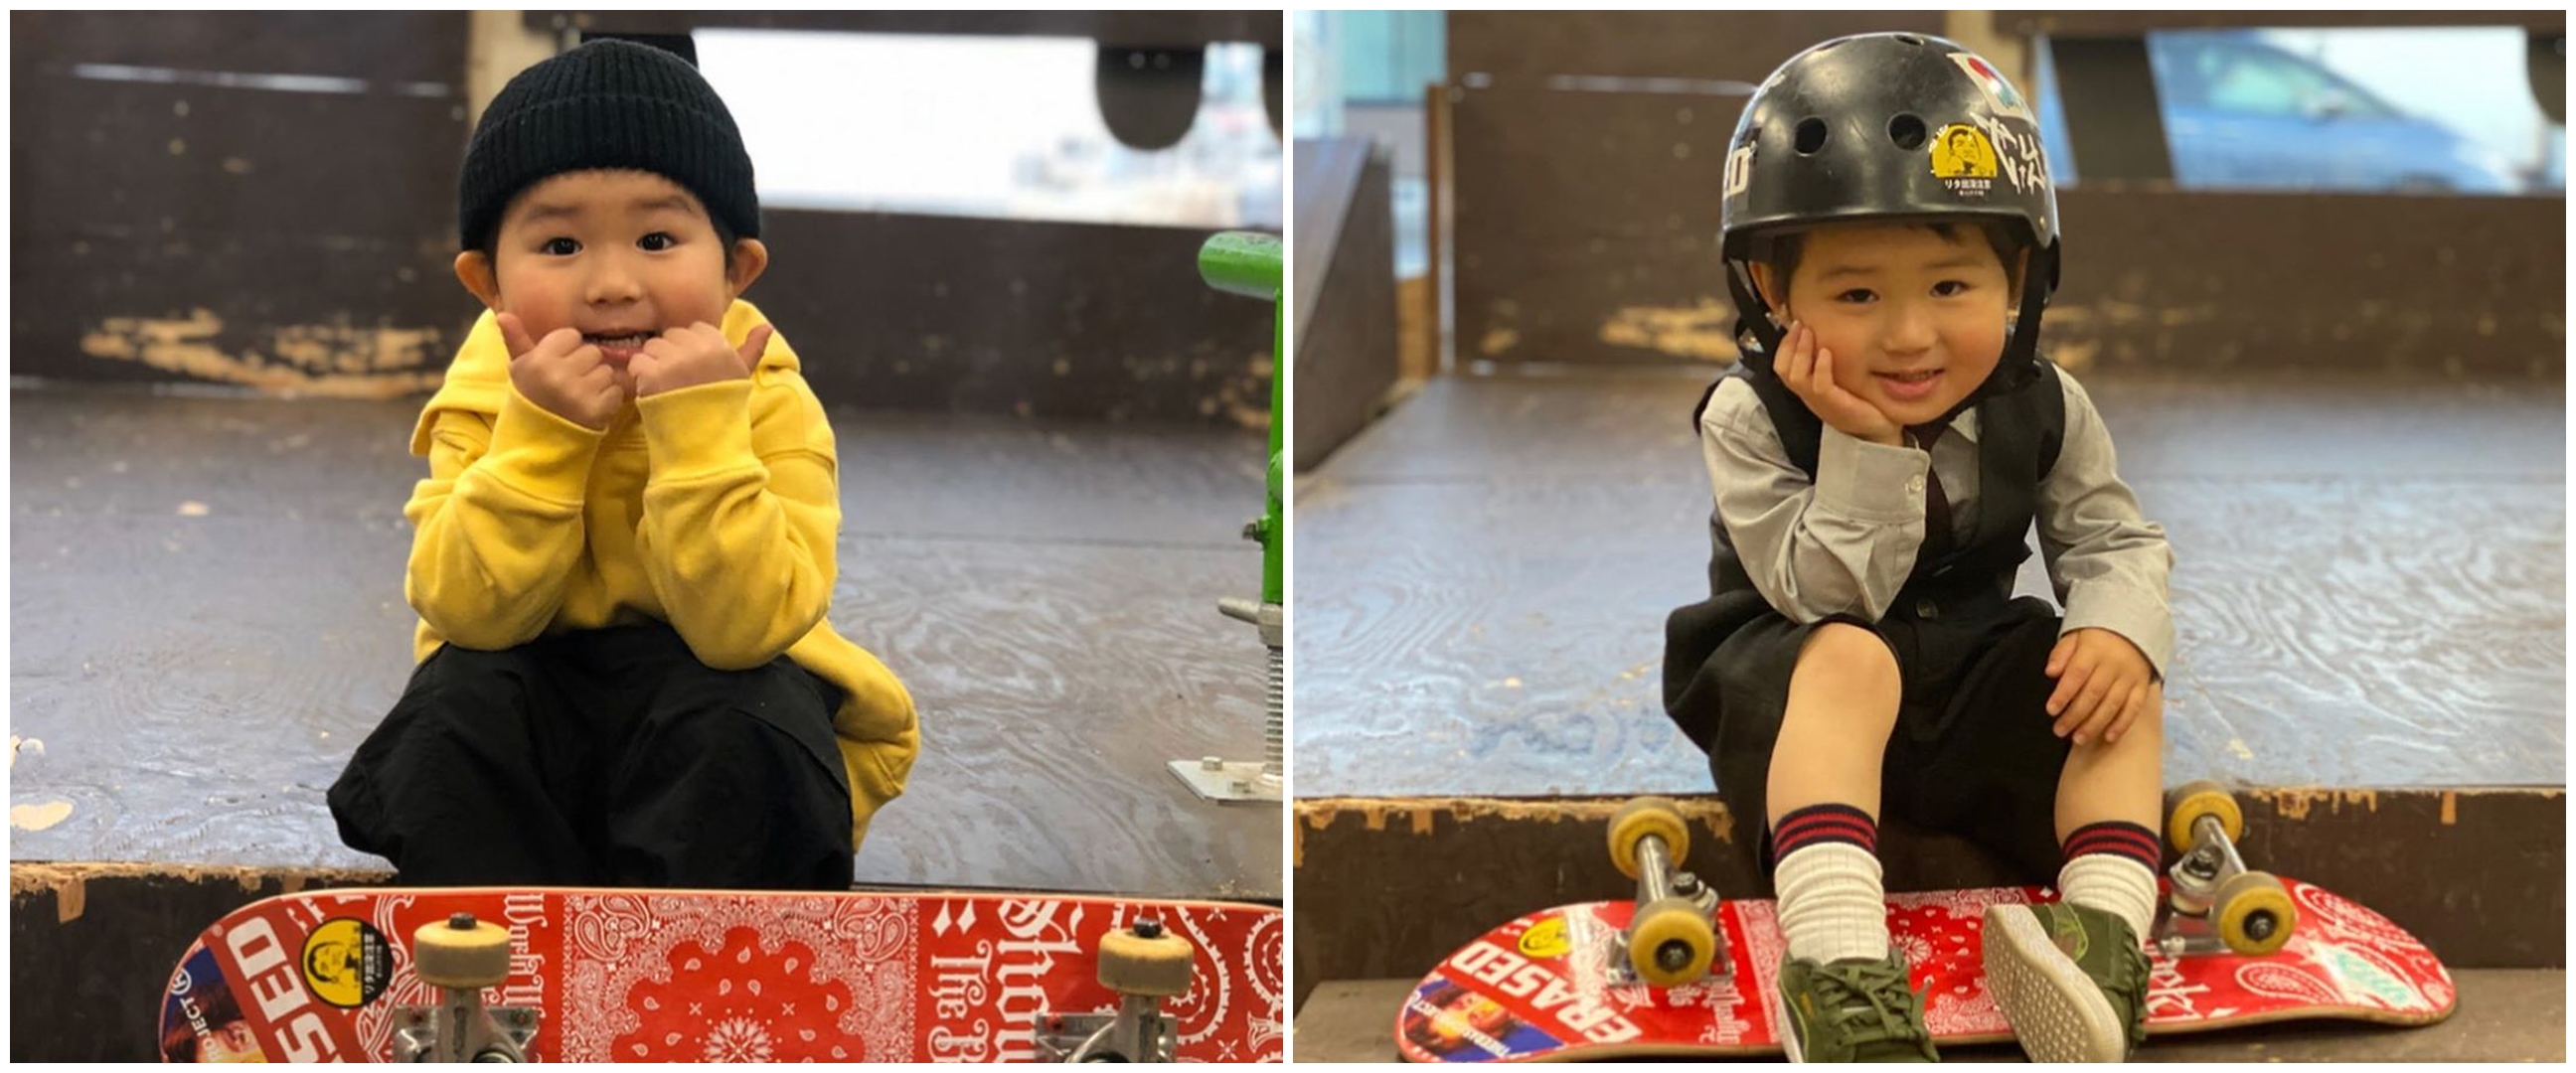 7 Aksi bocah 3 tahun yang jago skateboard, lompatannya memukau